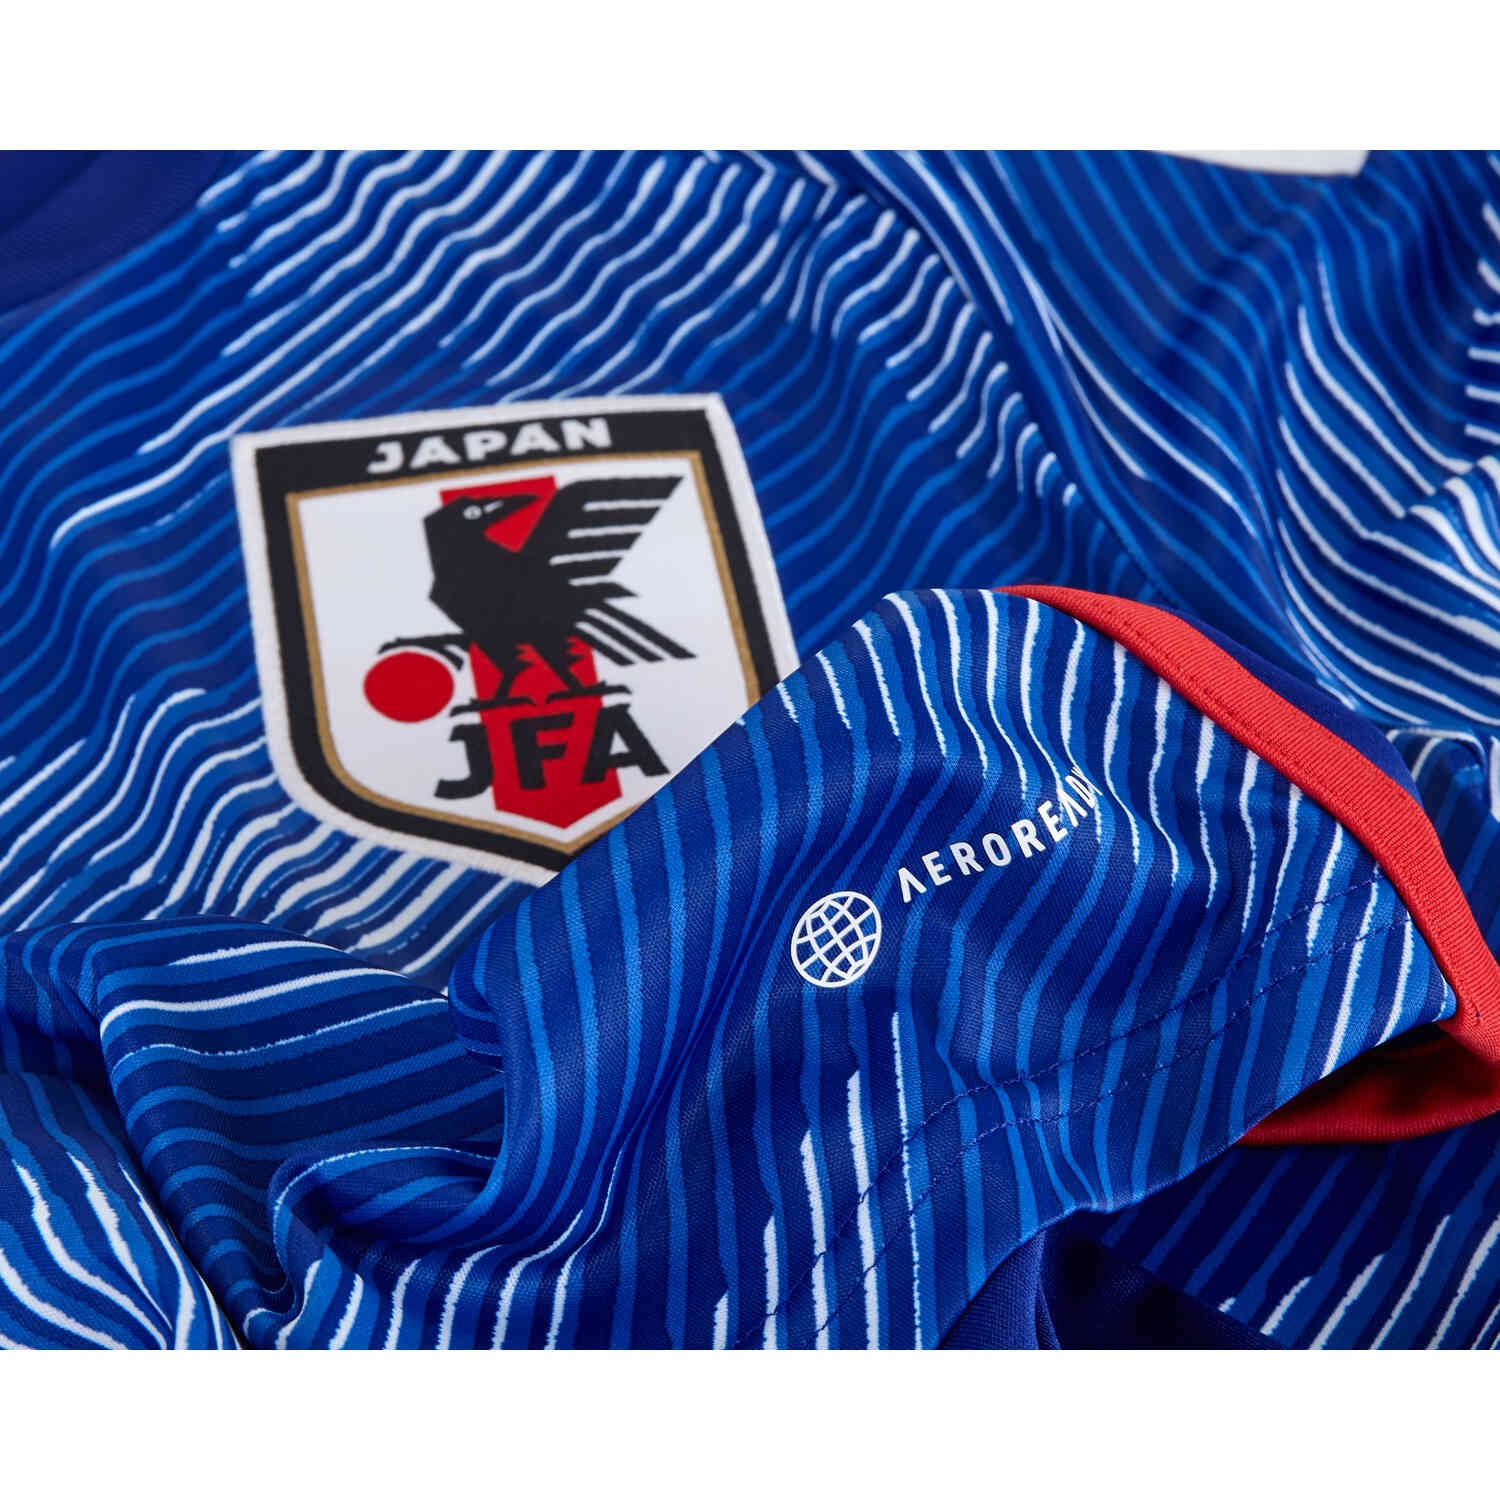 adidas Japan Jersey - Blue | adidas Malaysia